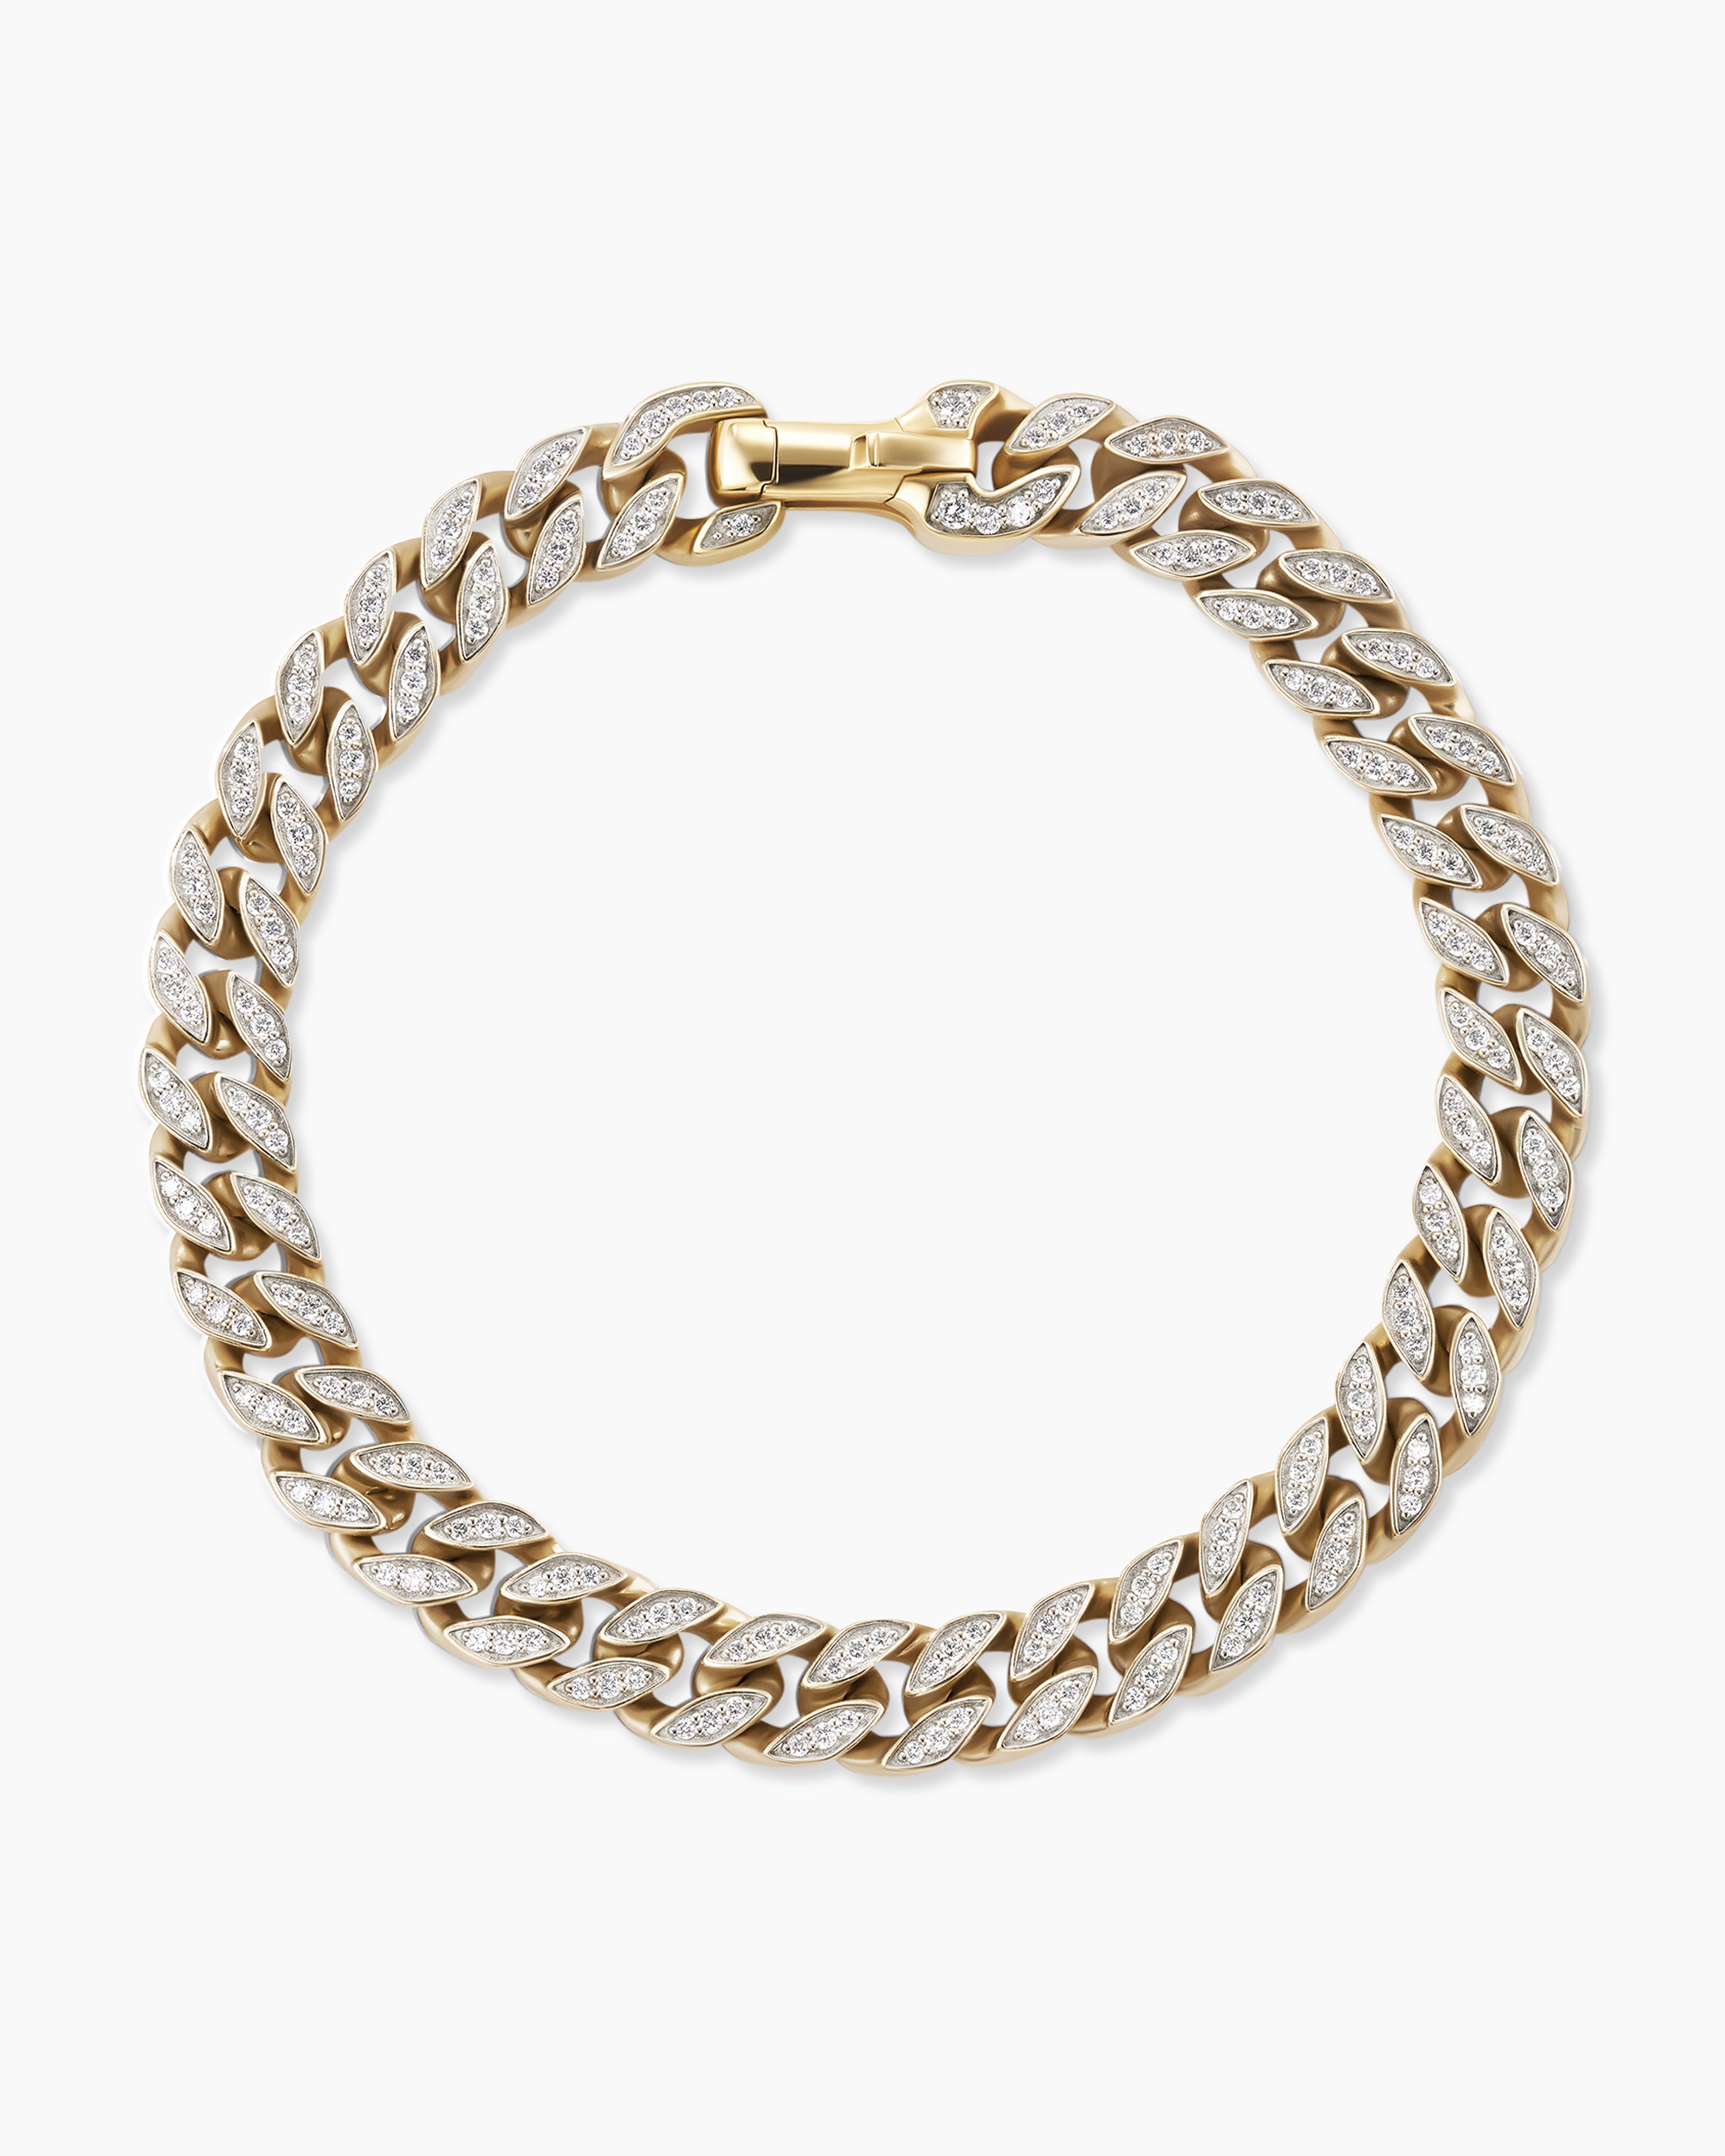 Gold men's bracelet | Man gold bracelet design, Mens gold bracelets, Gold  bracelet simple